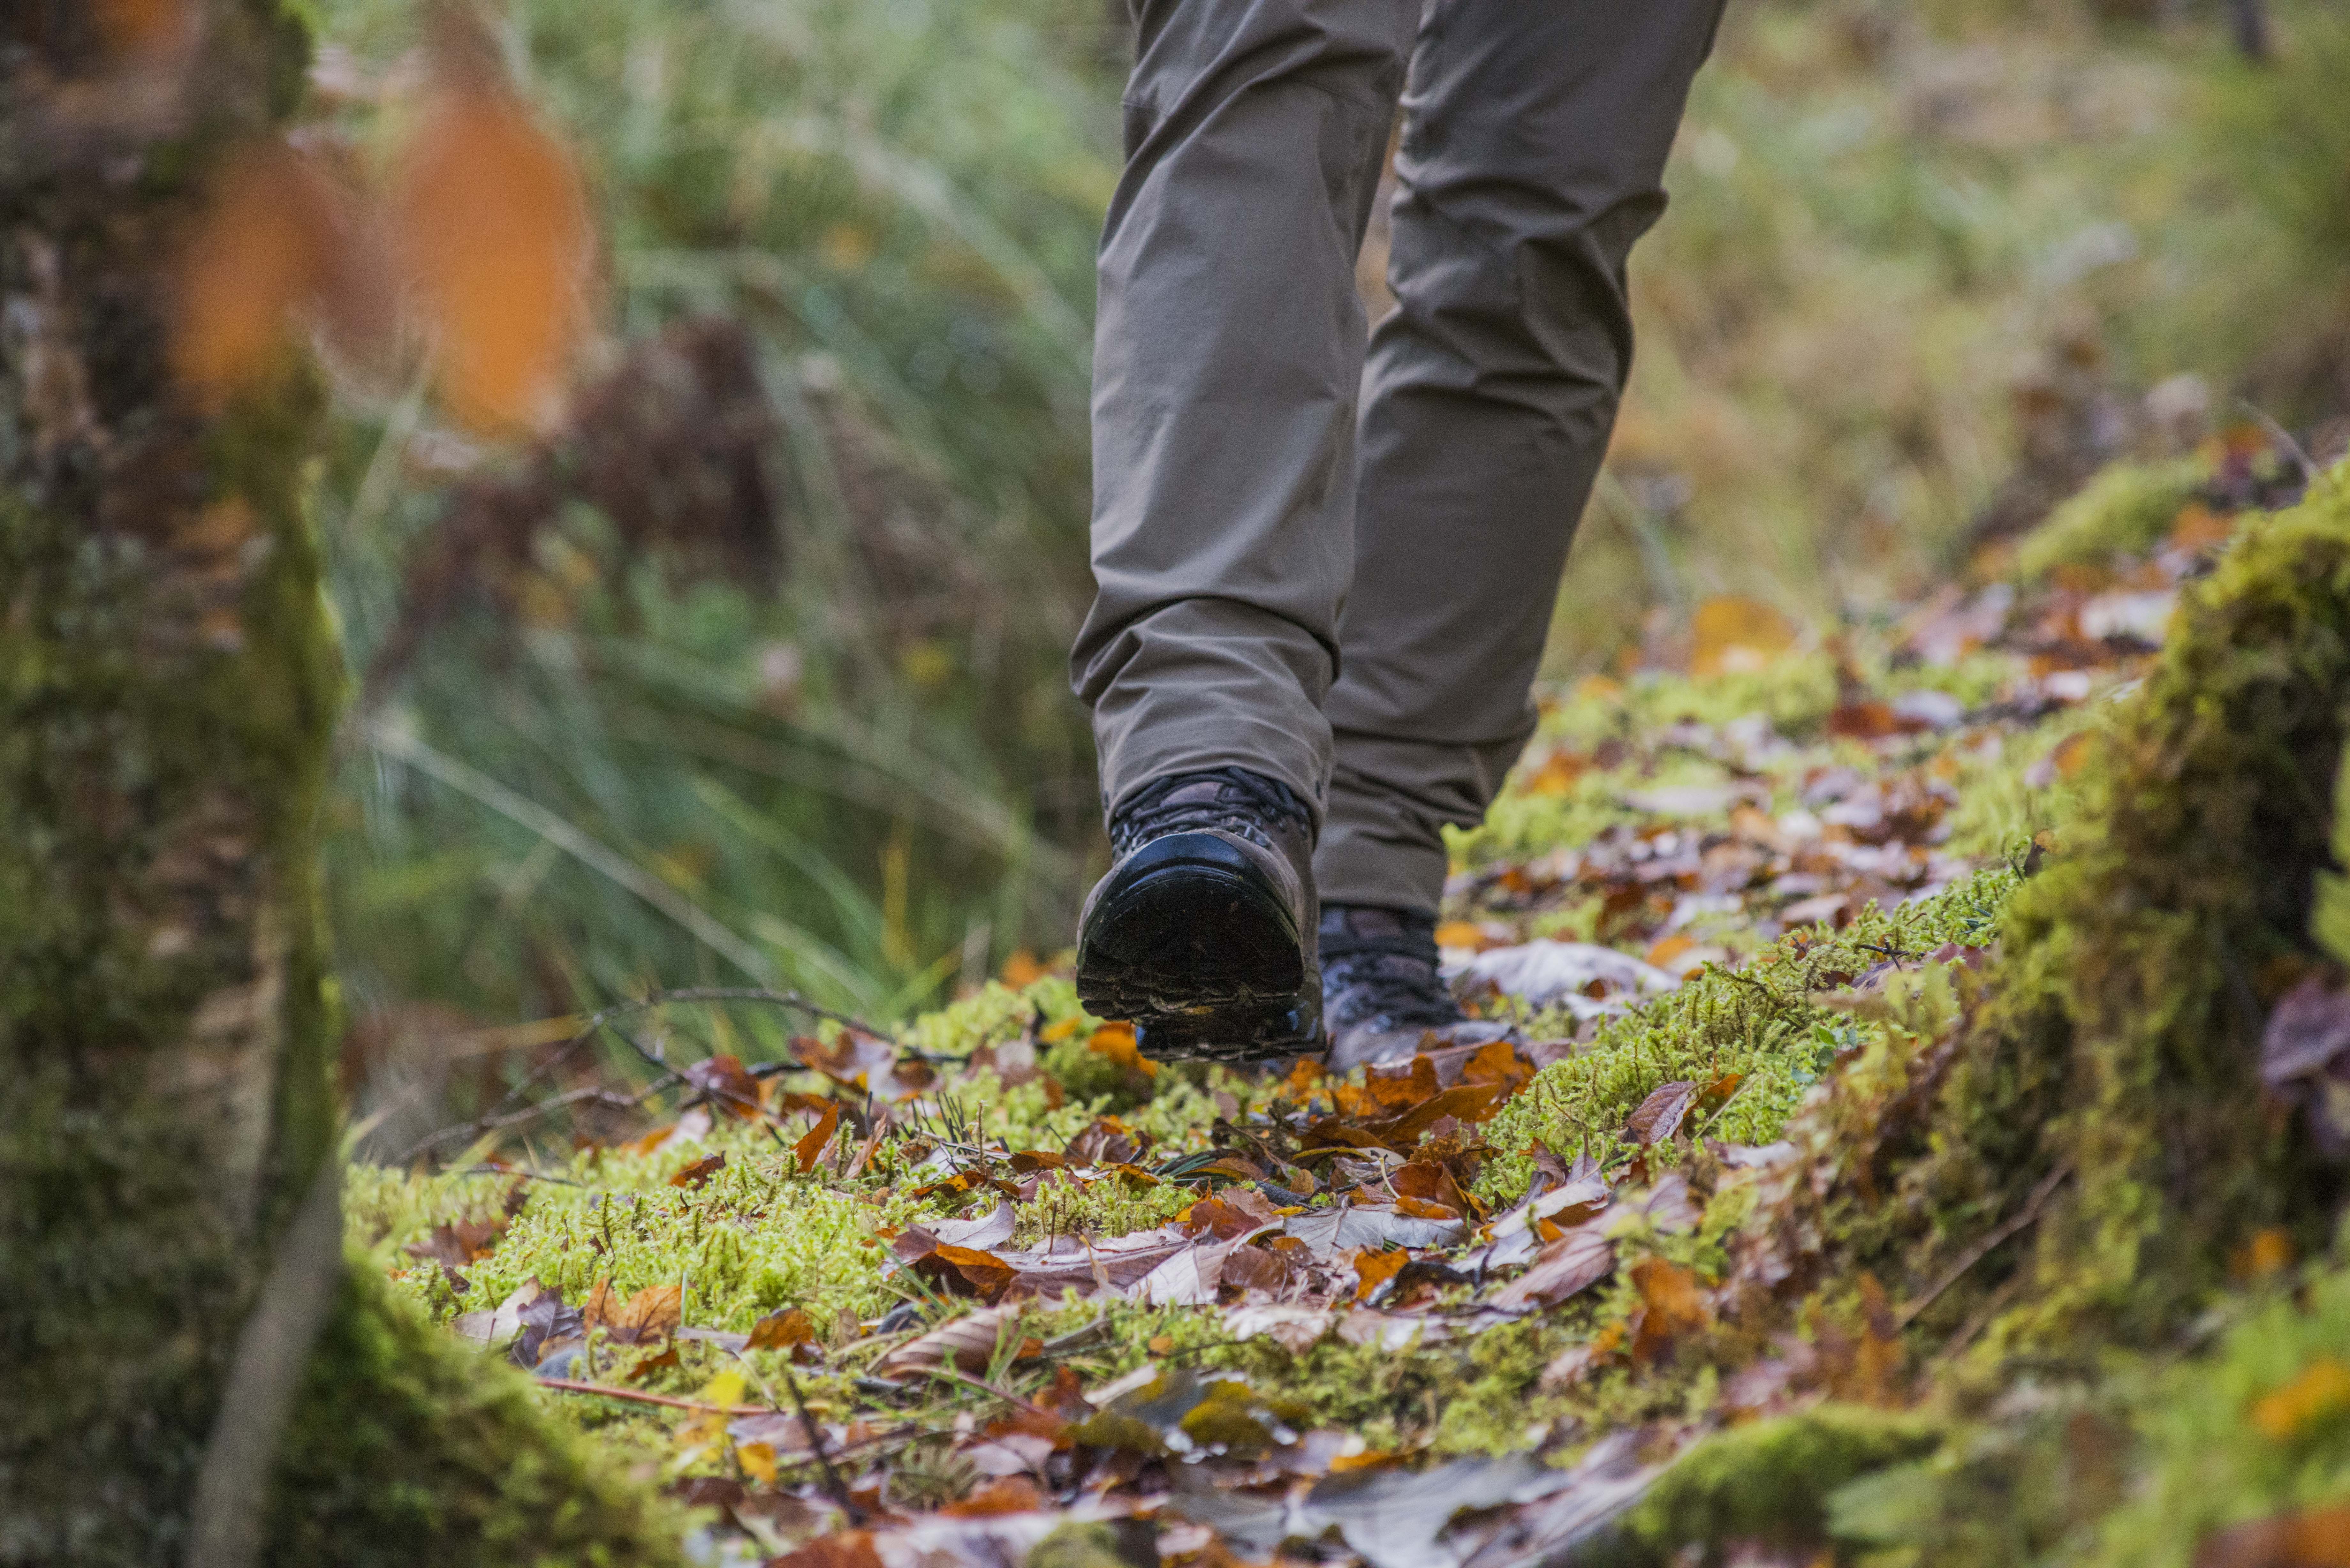 Man's feet walking on autumn leaves